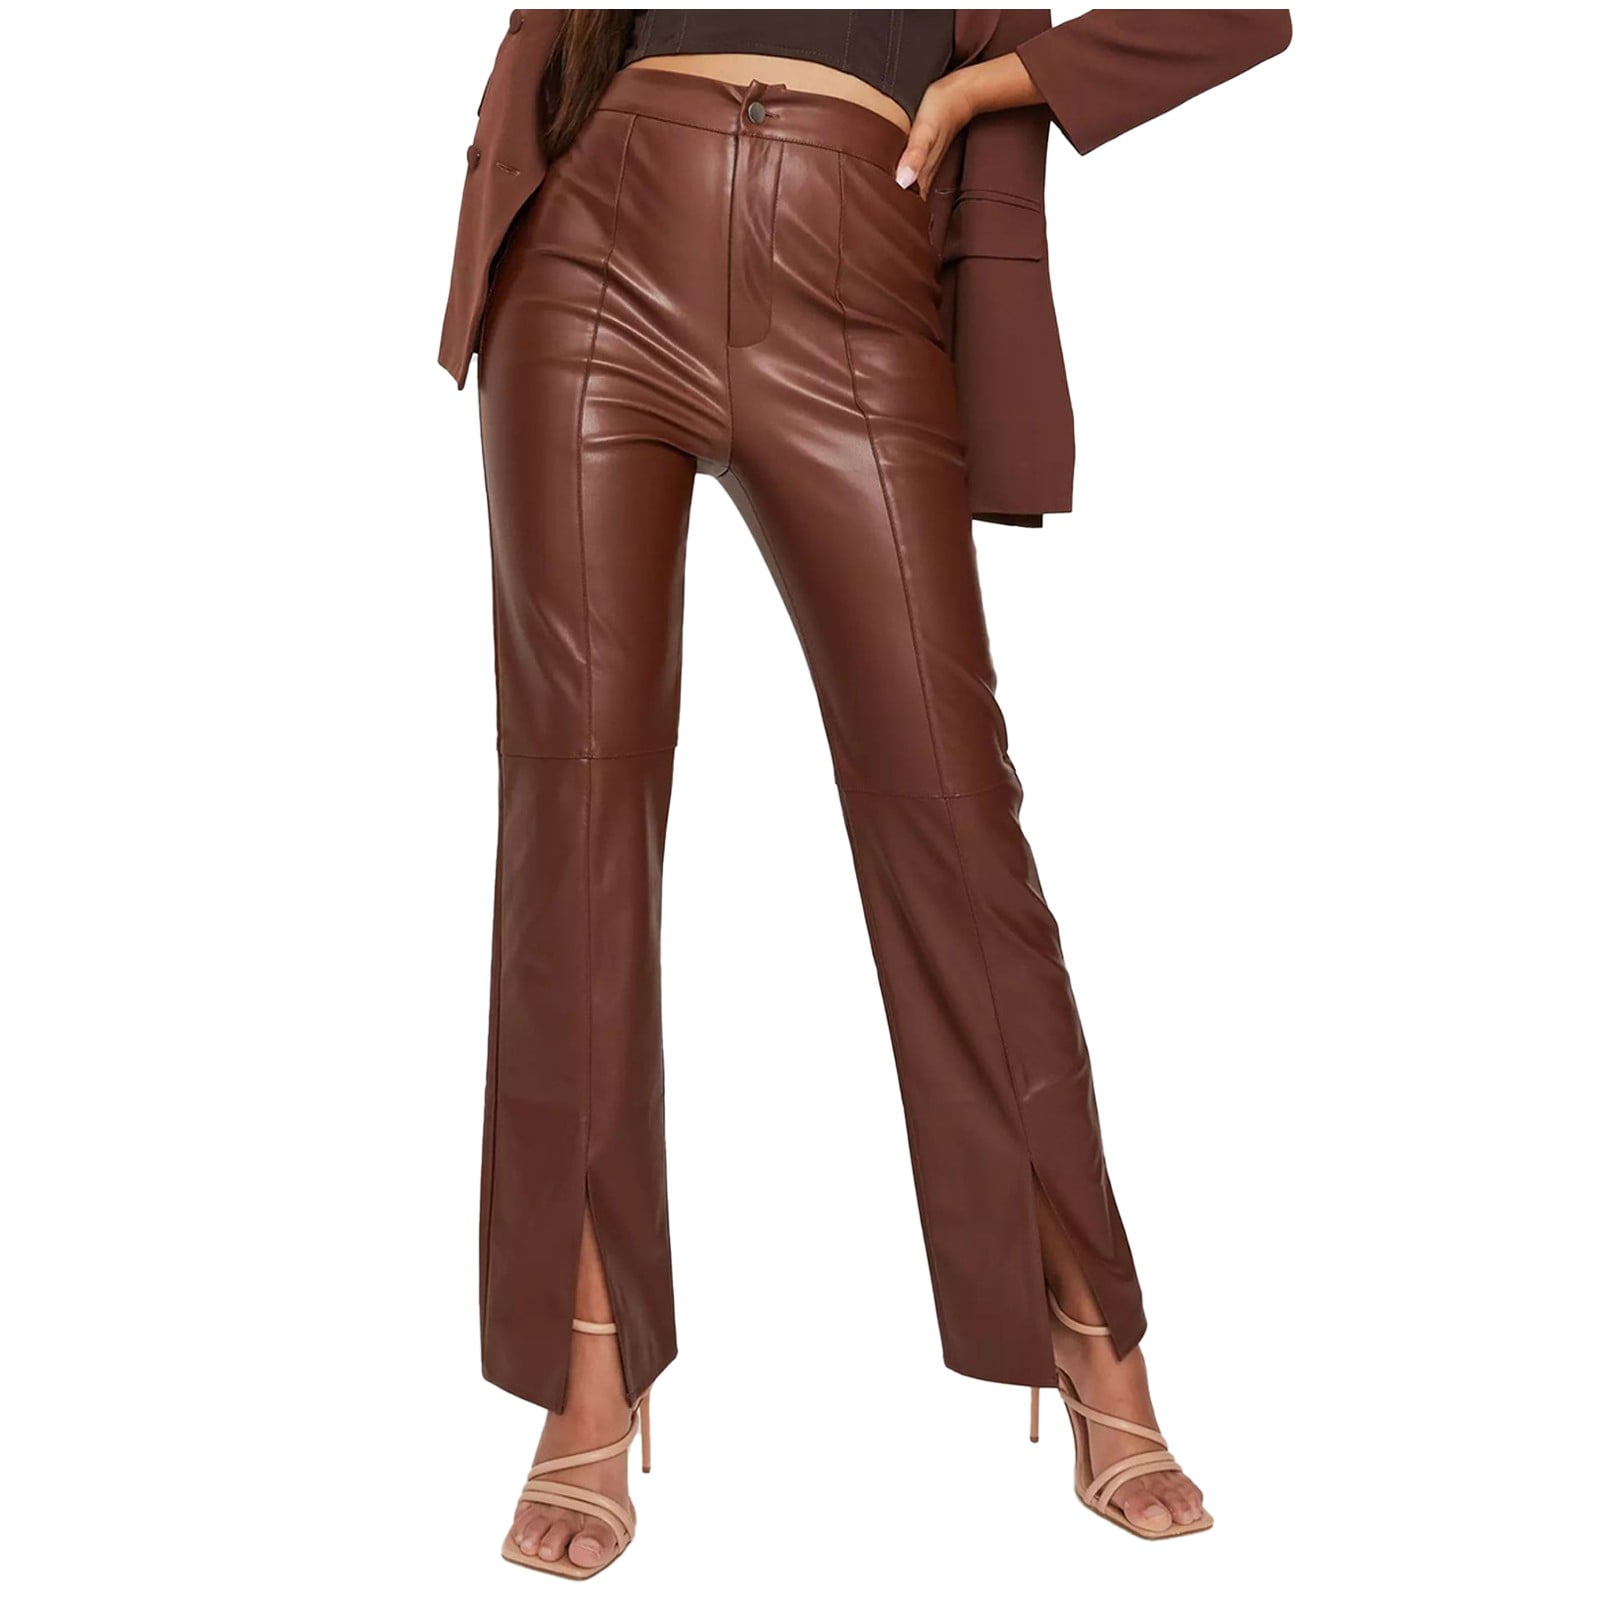 Pxiakgy pants for women Women Leather Pants Solid Color High Waist Straight  Wide Leg Leggings Slim Fit Trousers Vintage Pants Plus Size Pants Brown + M  - Walmart.com